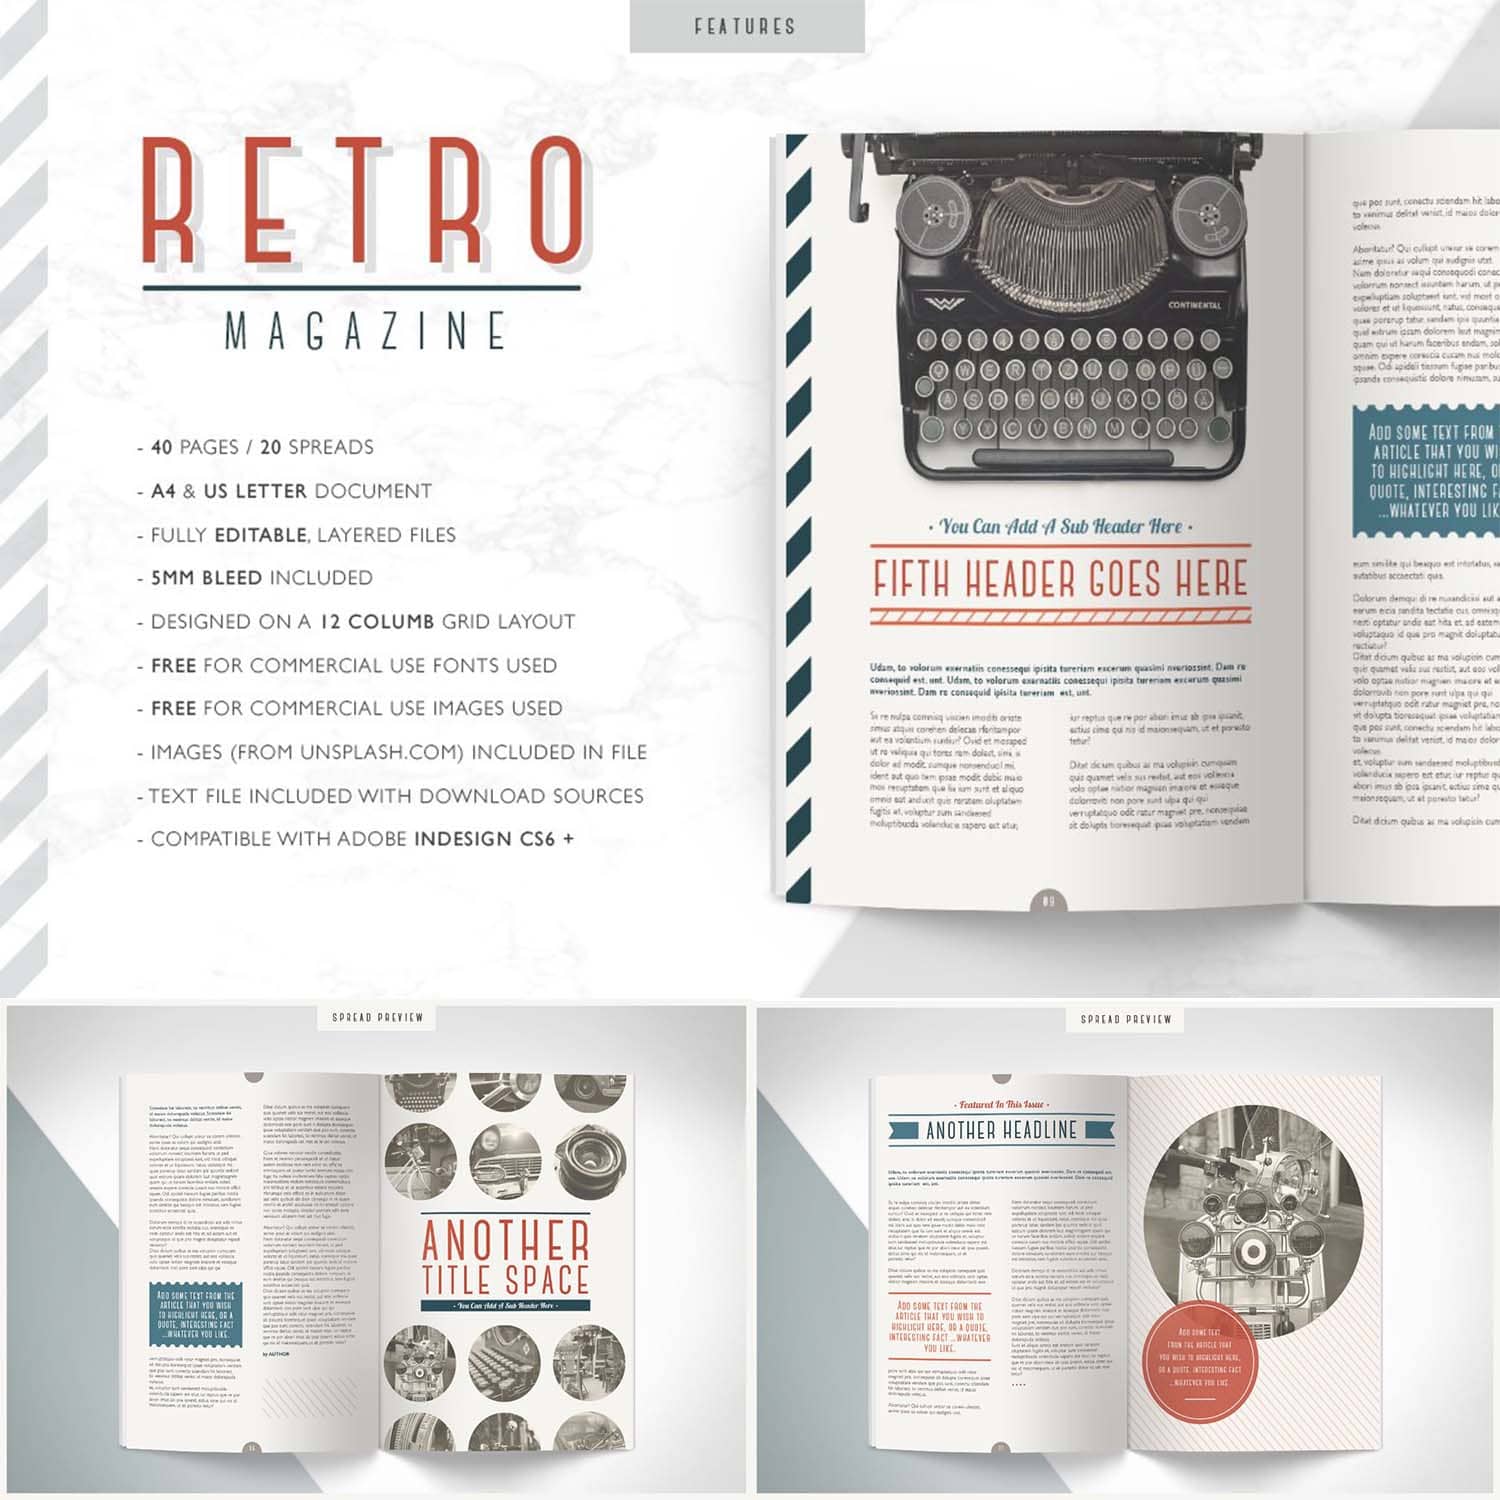 RETRO Magazine preview image.